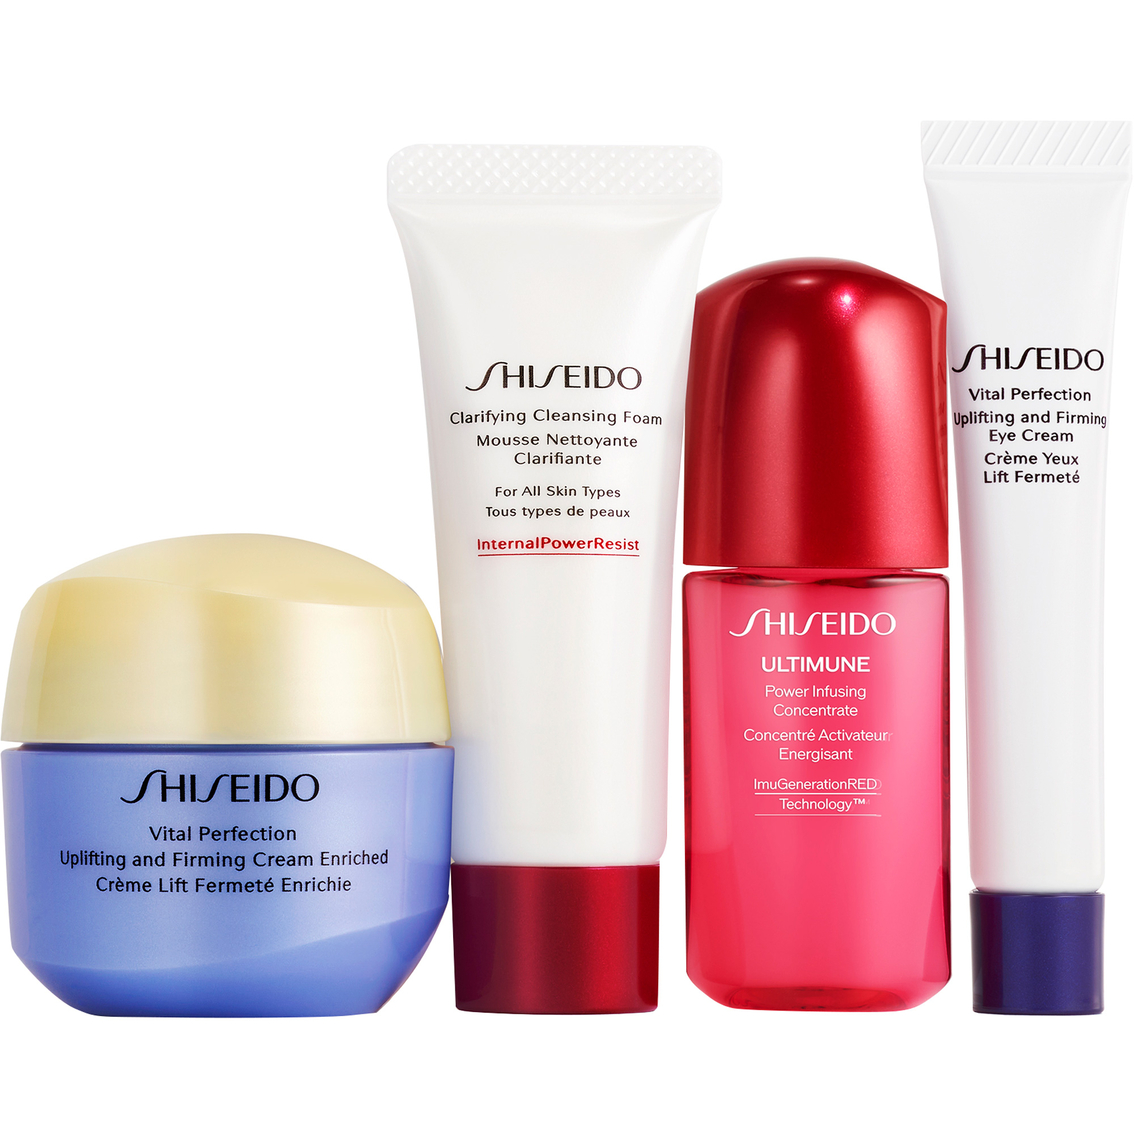 Shiseido Lifting and Firming Starter Set - Image 2 of 3